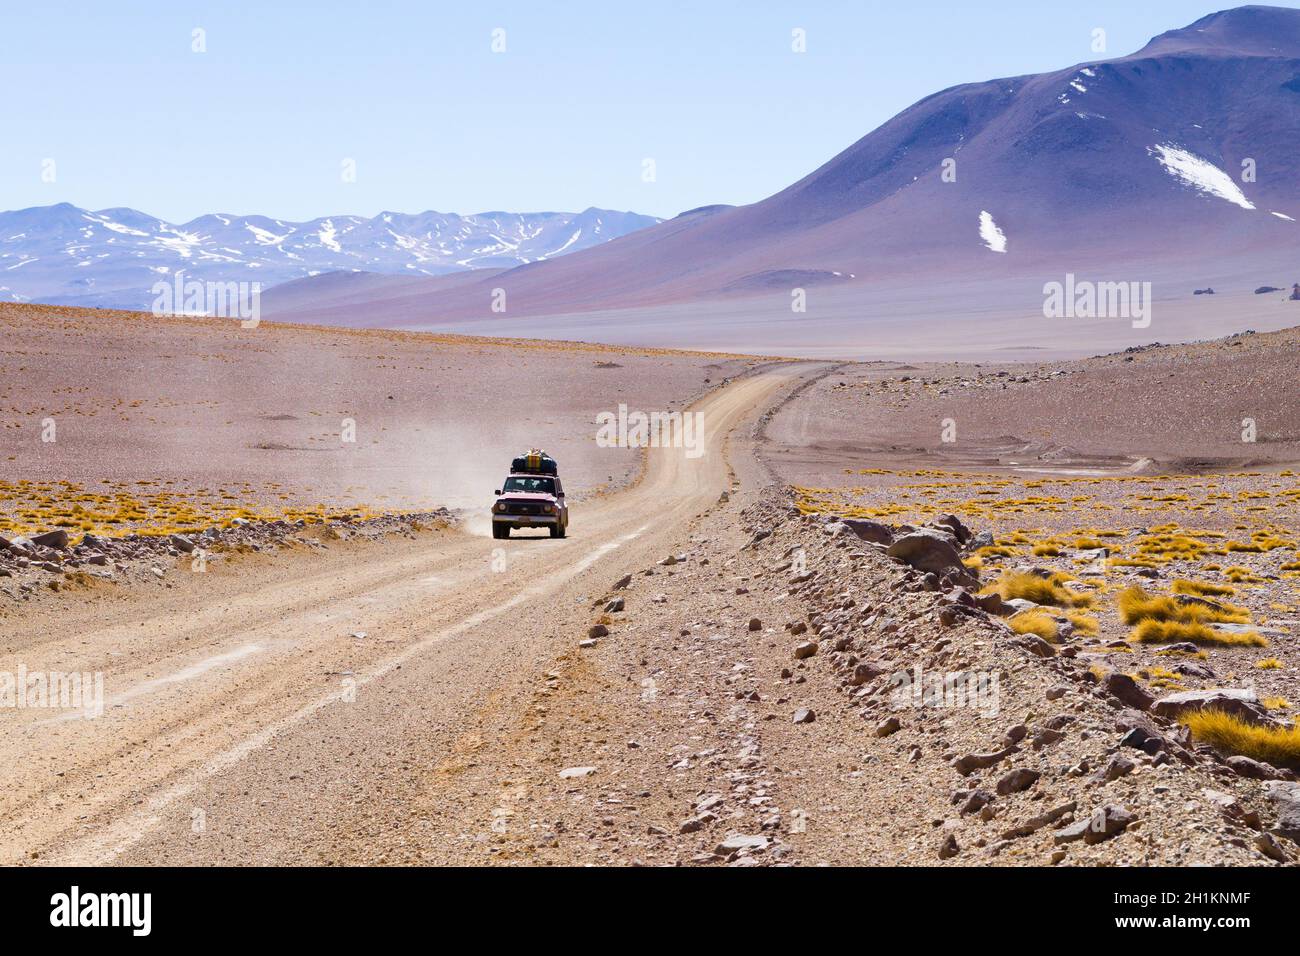 Bolivian dirt road perspective view,Bolivia. Salvador Dali Desert Stock Photo